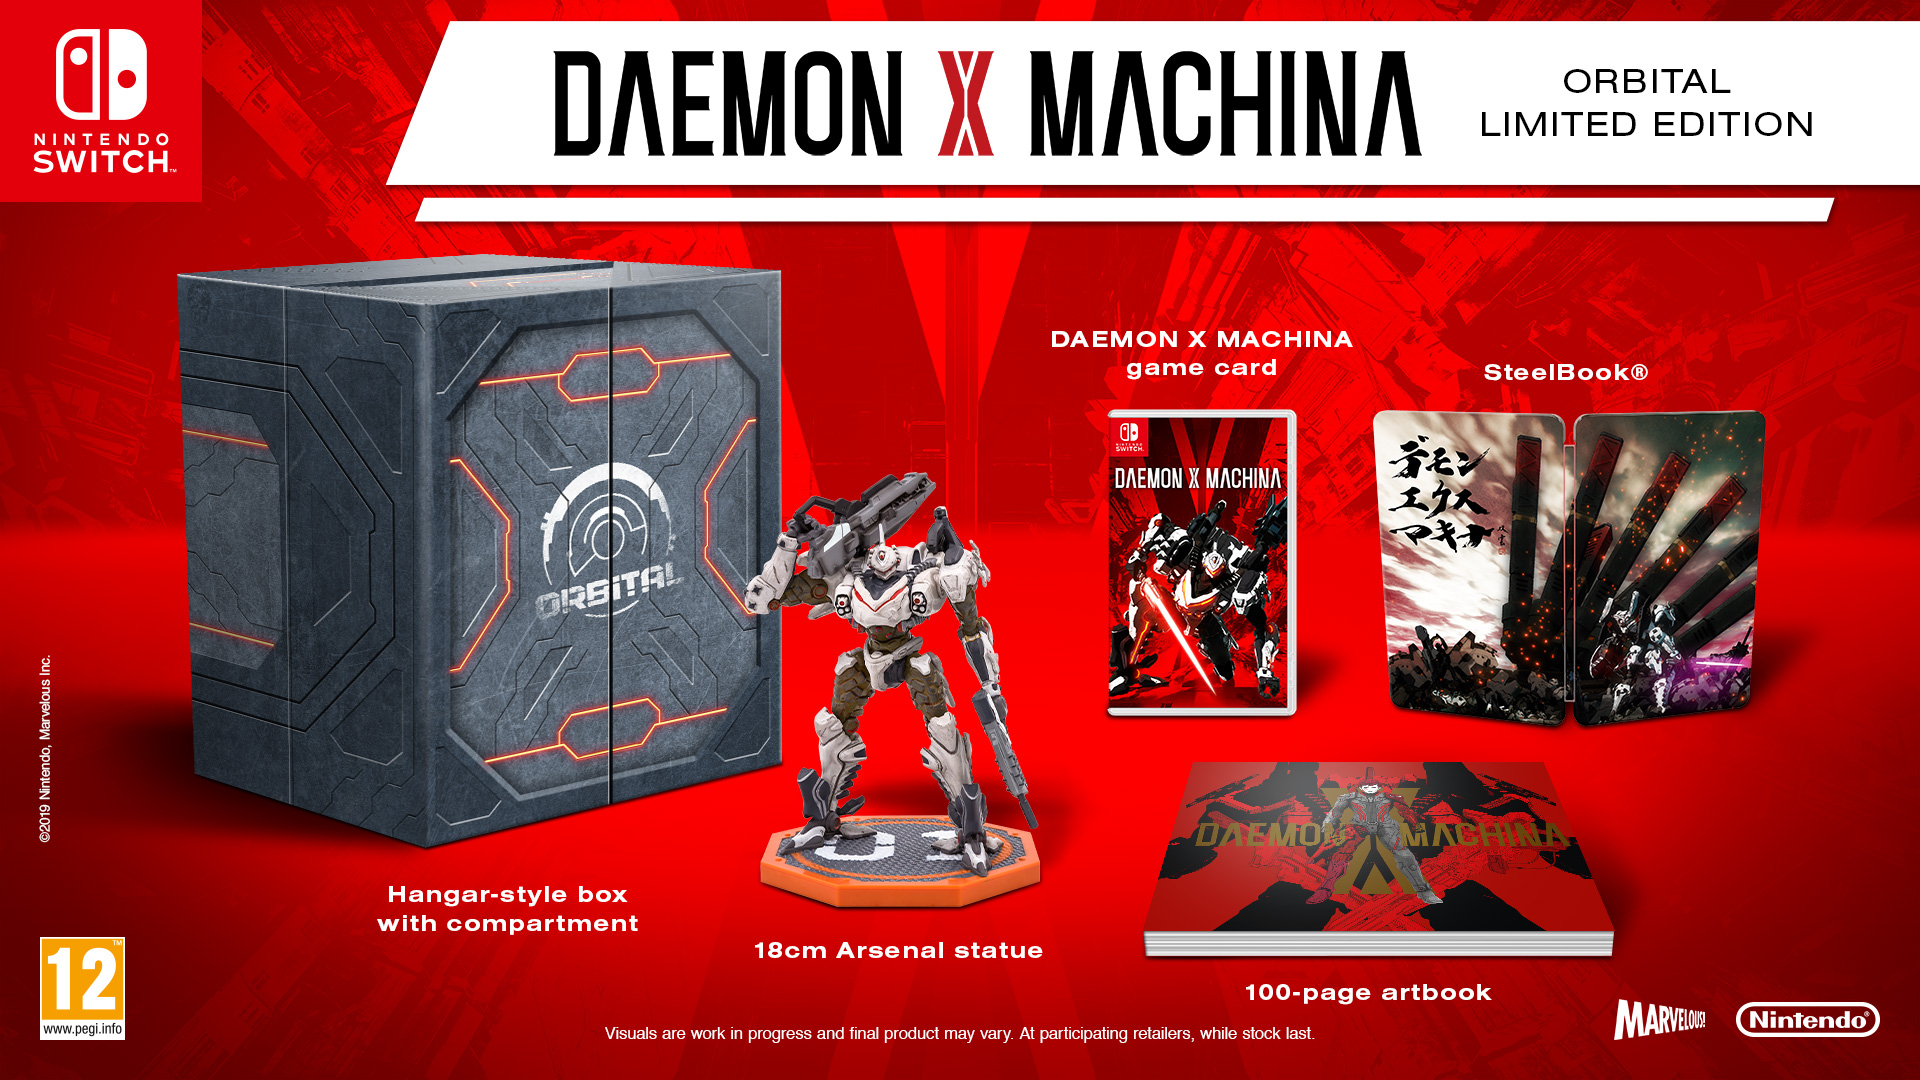 Daemon X Machina Orbital Limited Edition がヨーロッパ向けとして発売決定